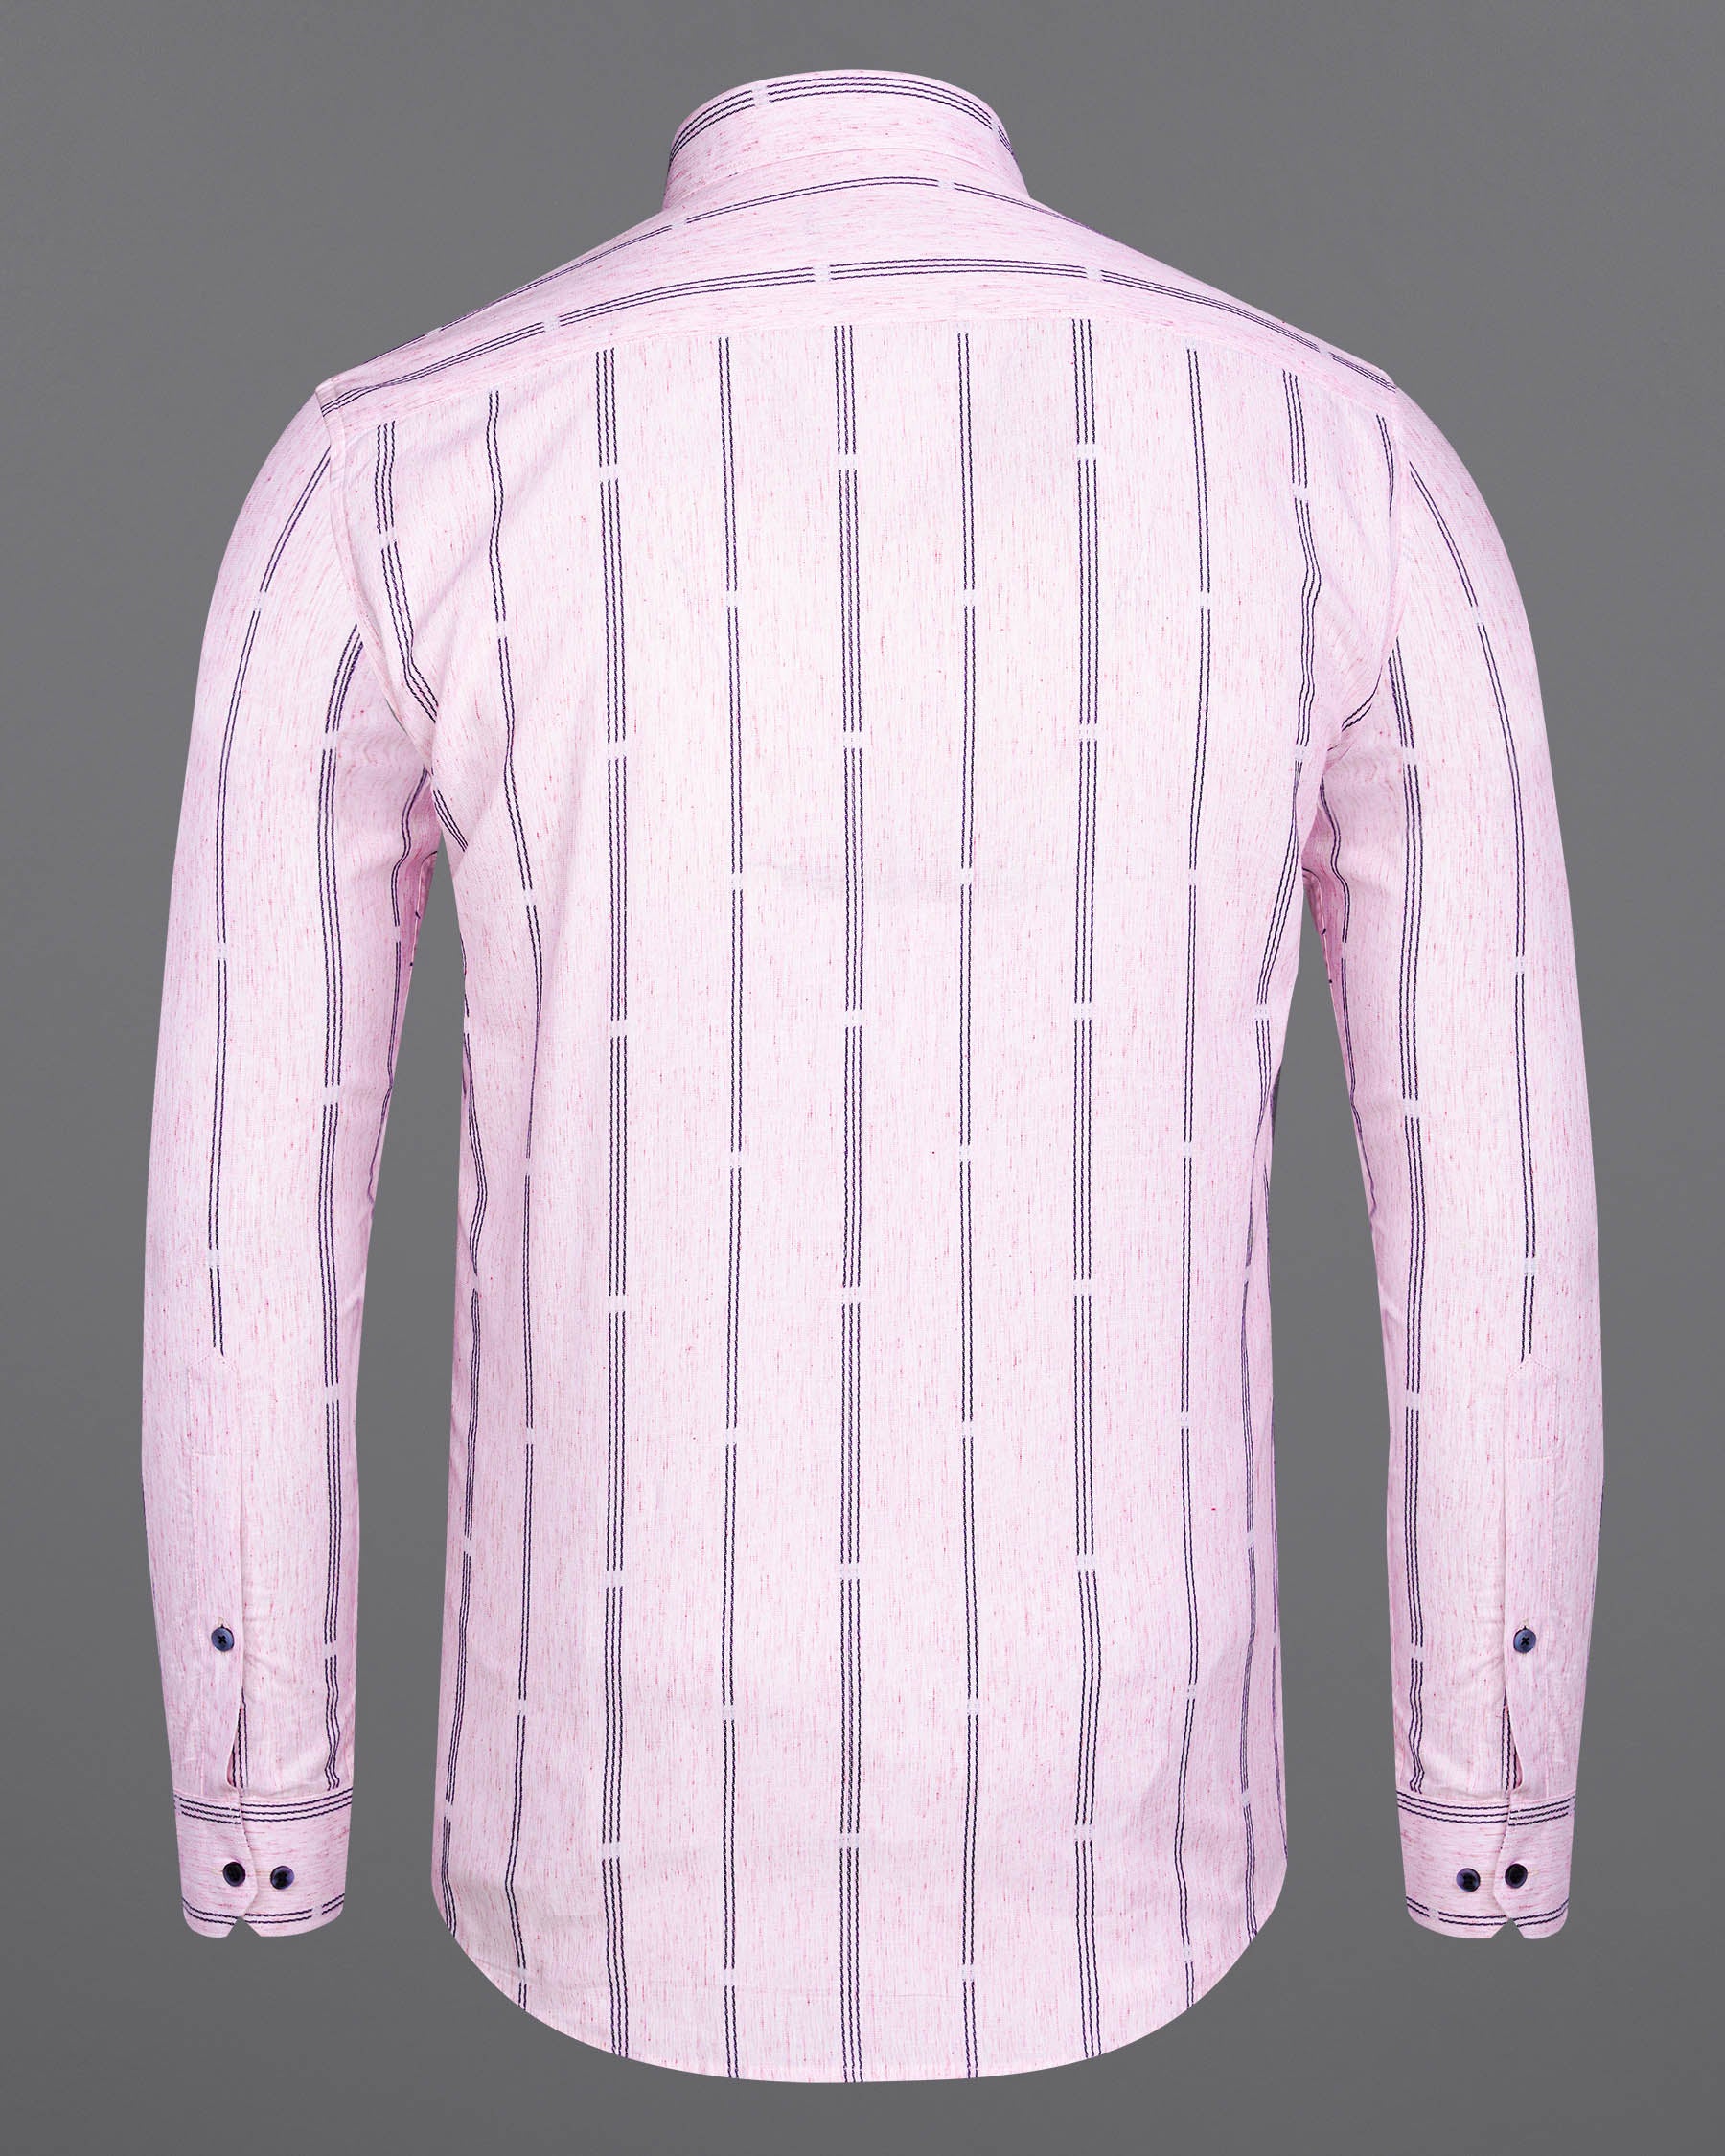 Twilight Pink Pinstriped Dobby Textured Premium Giza Cotton Shirt 7530-BLE-38, 7530-BLE-H-38, 7530-BLE-39, 7530-BLE-H-39, 7530-BLE-40, 7530-BLE-H-40, 7530-BLE-42, 7530-BLE-H-42, 7530-BLE-44, 7530-BLE-H-44, 7530-BLE-46, 7530-BLE-H-46, 7530-BLE-48, 7530-BLE-H-48, 7530-BLE-50, 7530-BLE-H-50, 7530-BLE-52, 7530-BLE-H-52